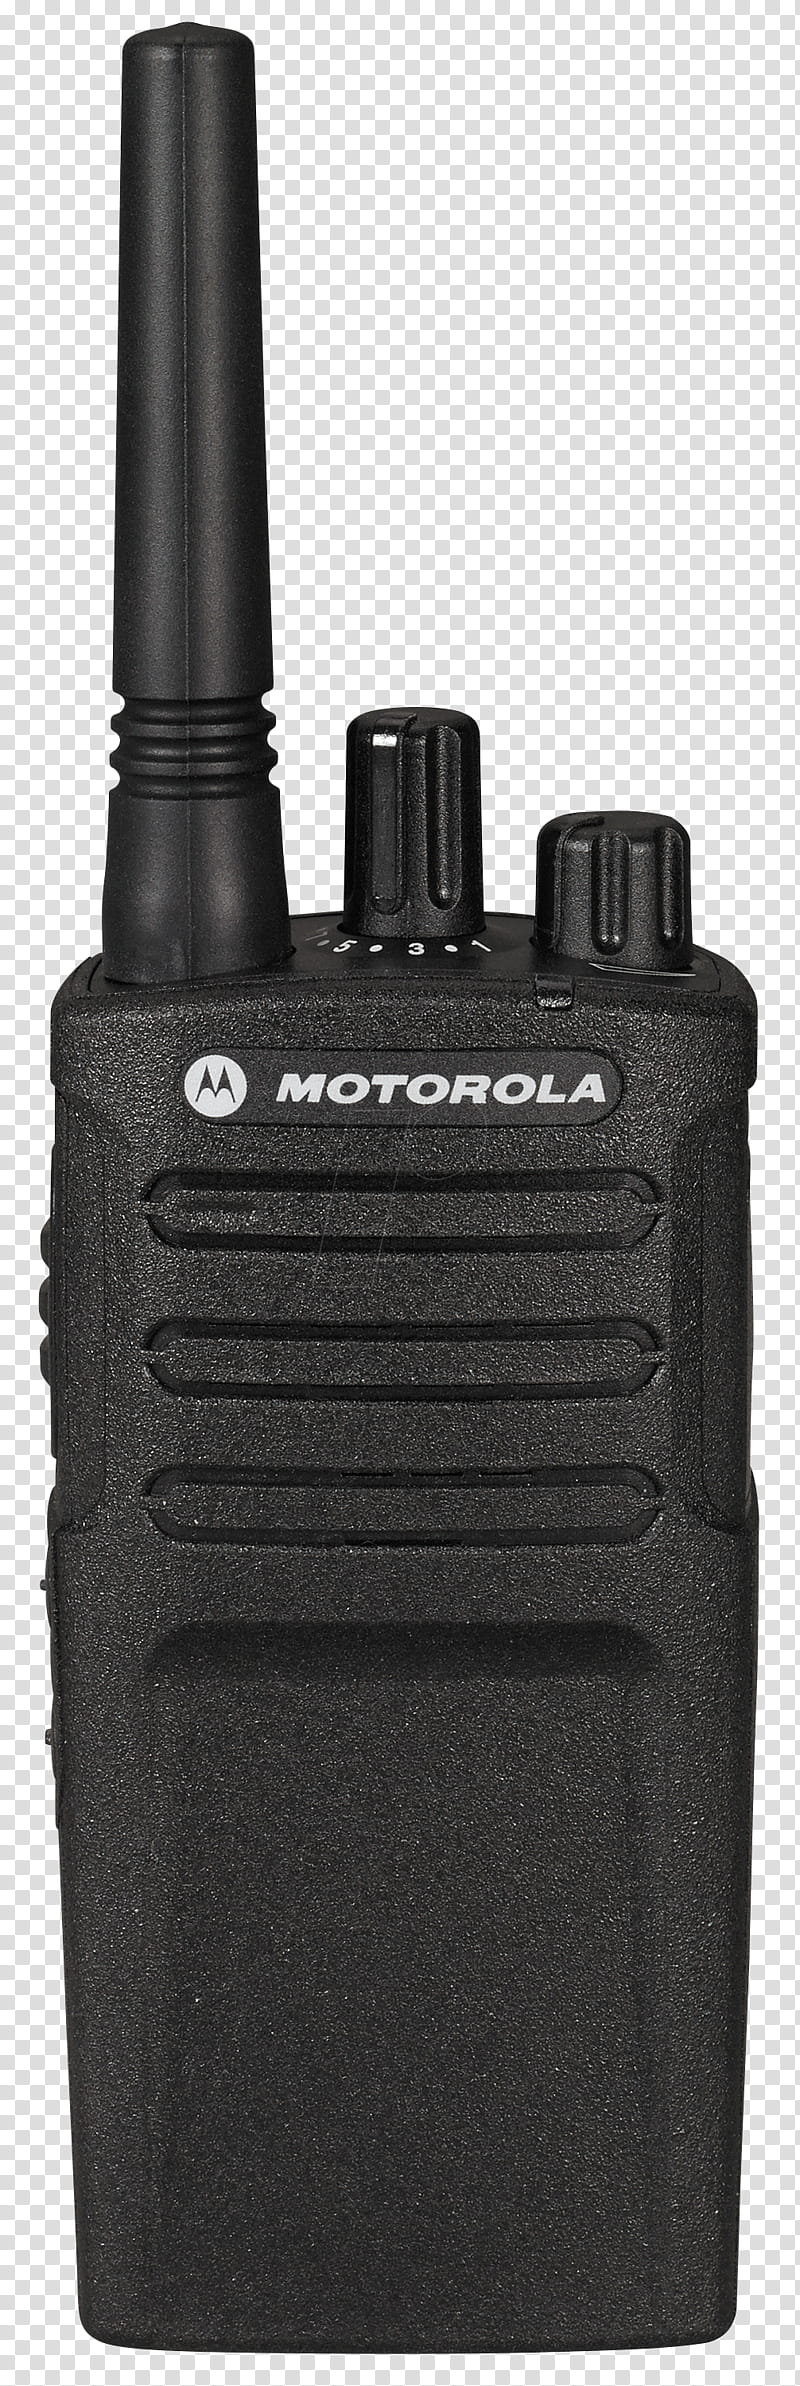 Handheld Twoway Radios Twoway Radio, Motorola, Pmr446, Motorola Rmu2080d, Technology, Communication Device transparent background PNG clipart